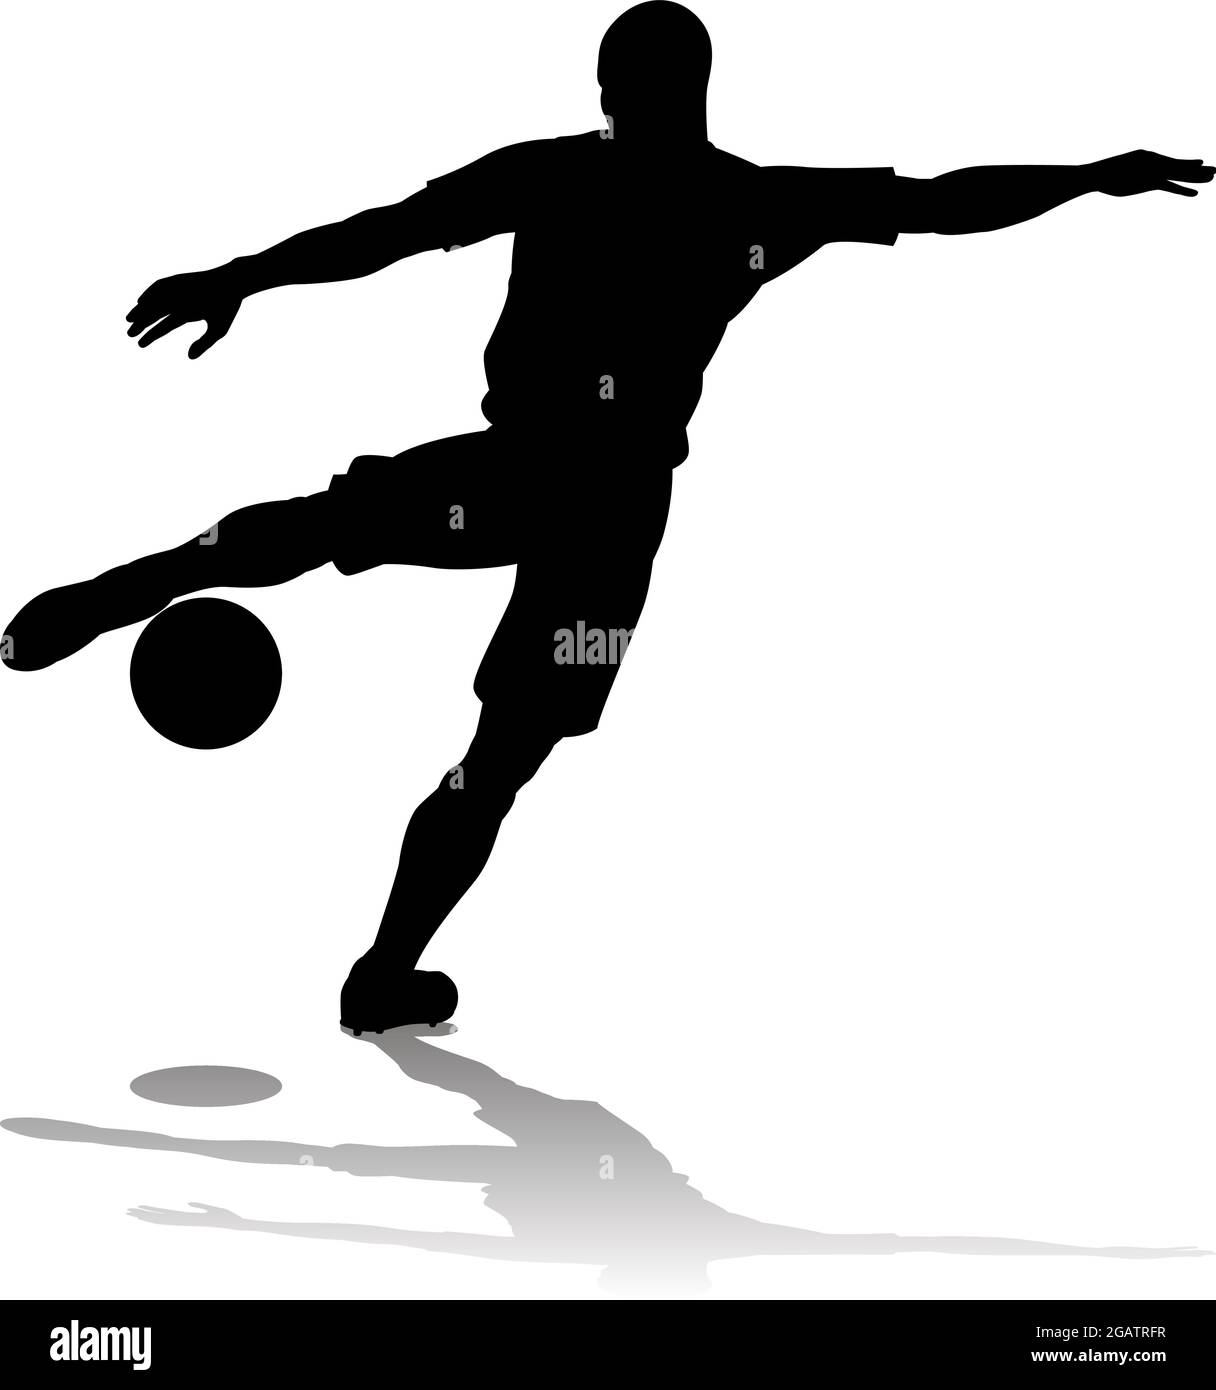 Football Soccer Player Silhouette Illustration de Vecteur